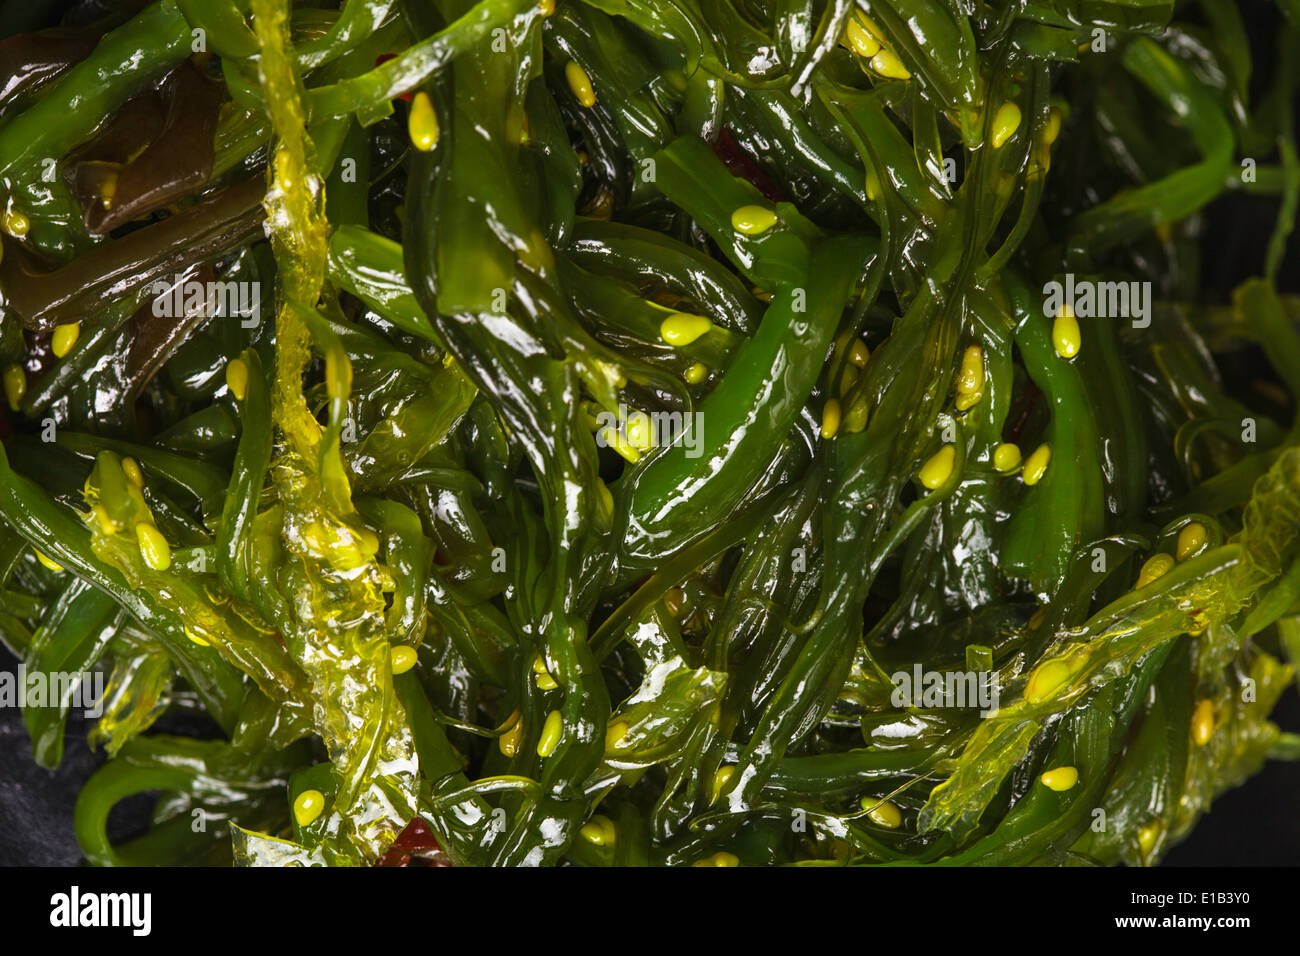 Seaweed salad - healthy sea food in the bowl Stock Photo